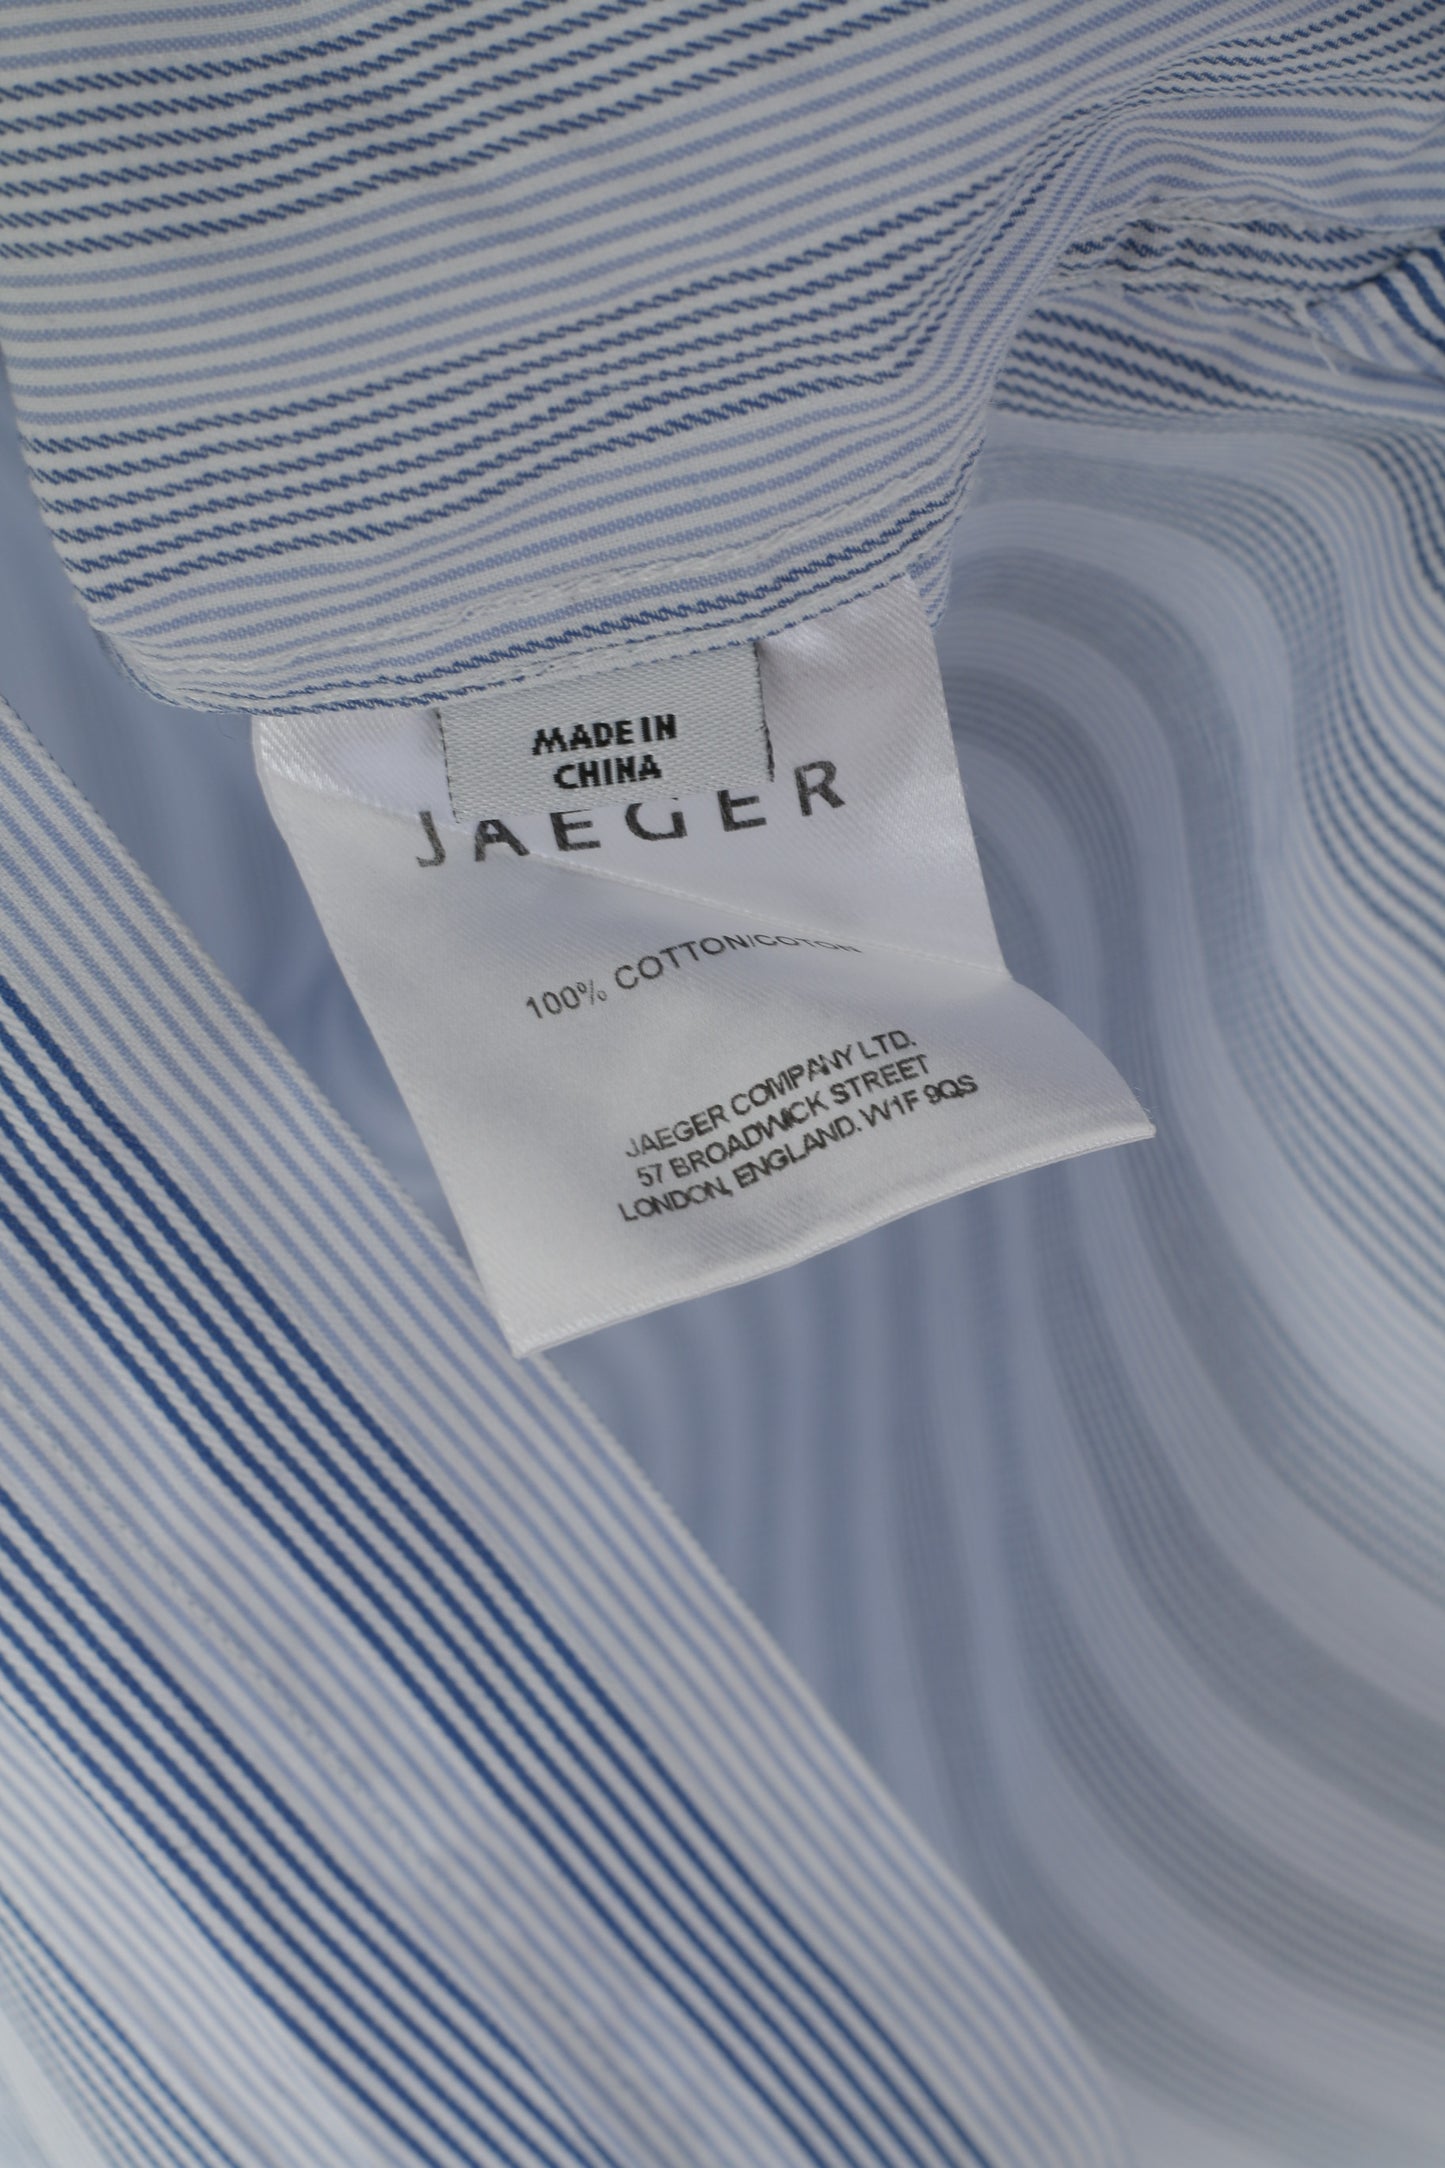 Jaeger London Men 15.5 M Casual Shirt Blue Striped Cotton Cuff Long Sleeve Top